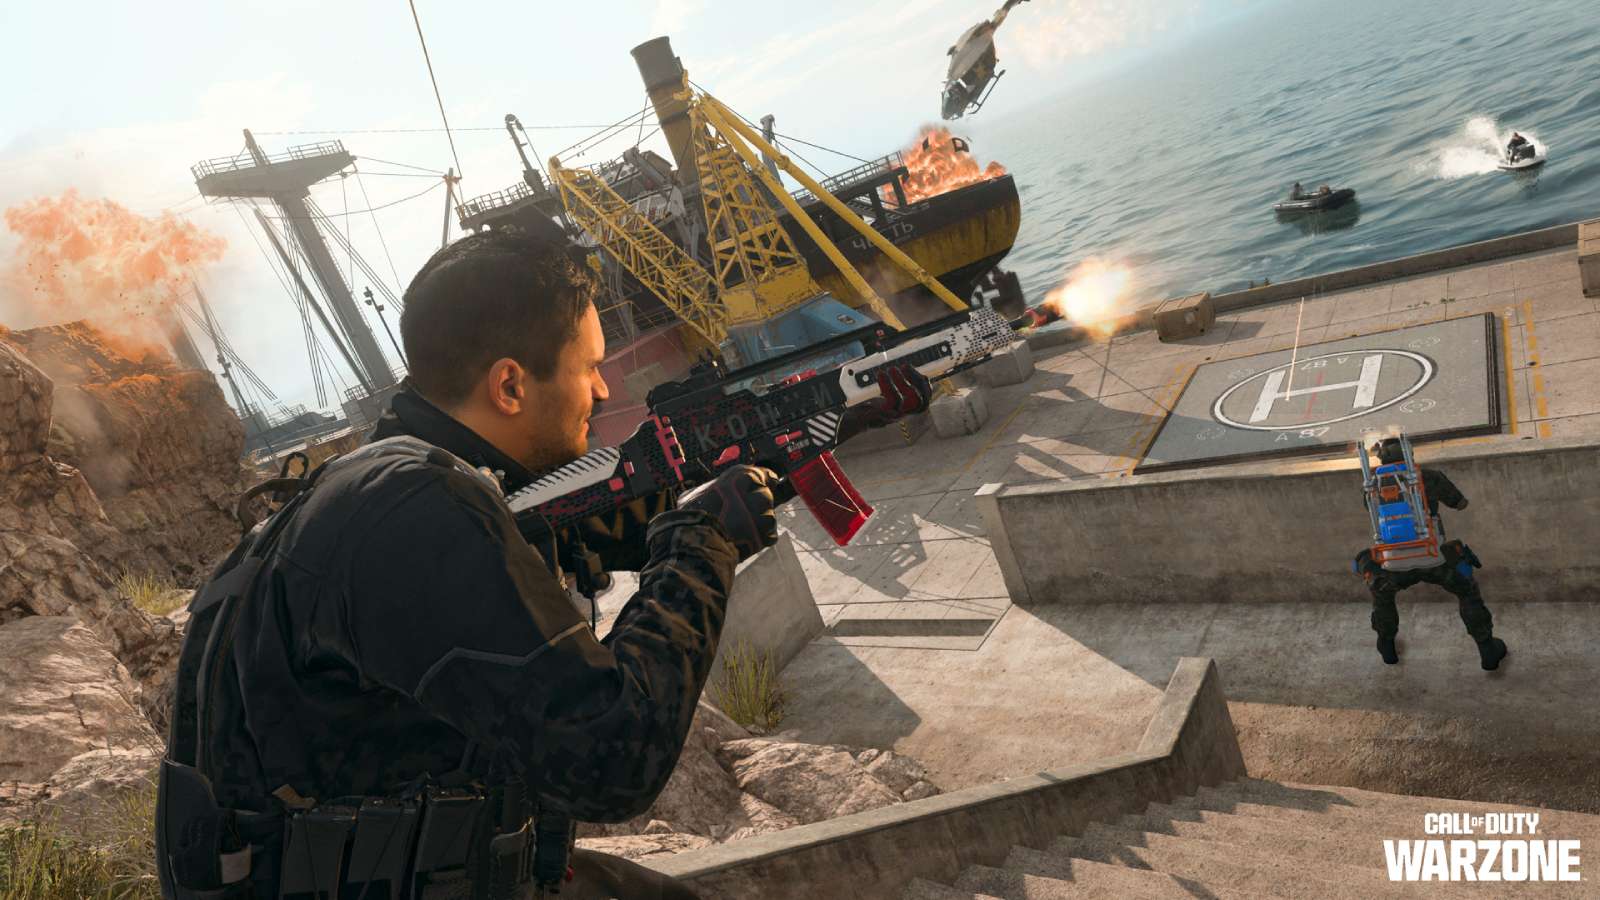 Warzone teamfight gameplay image